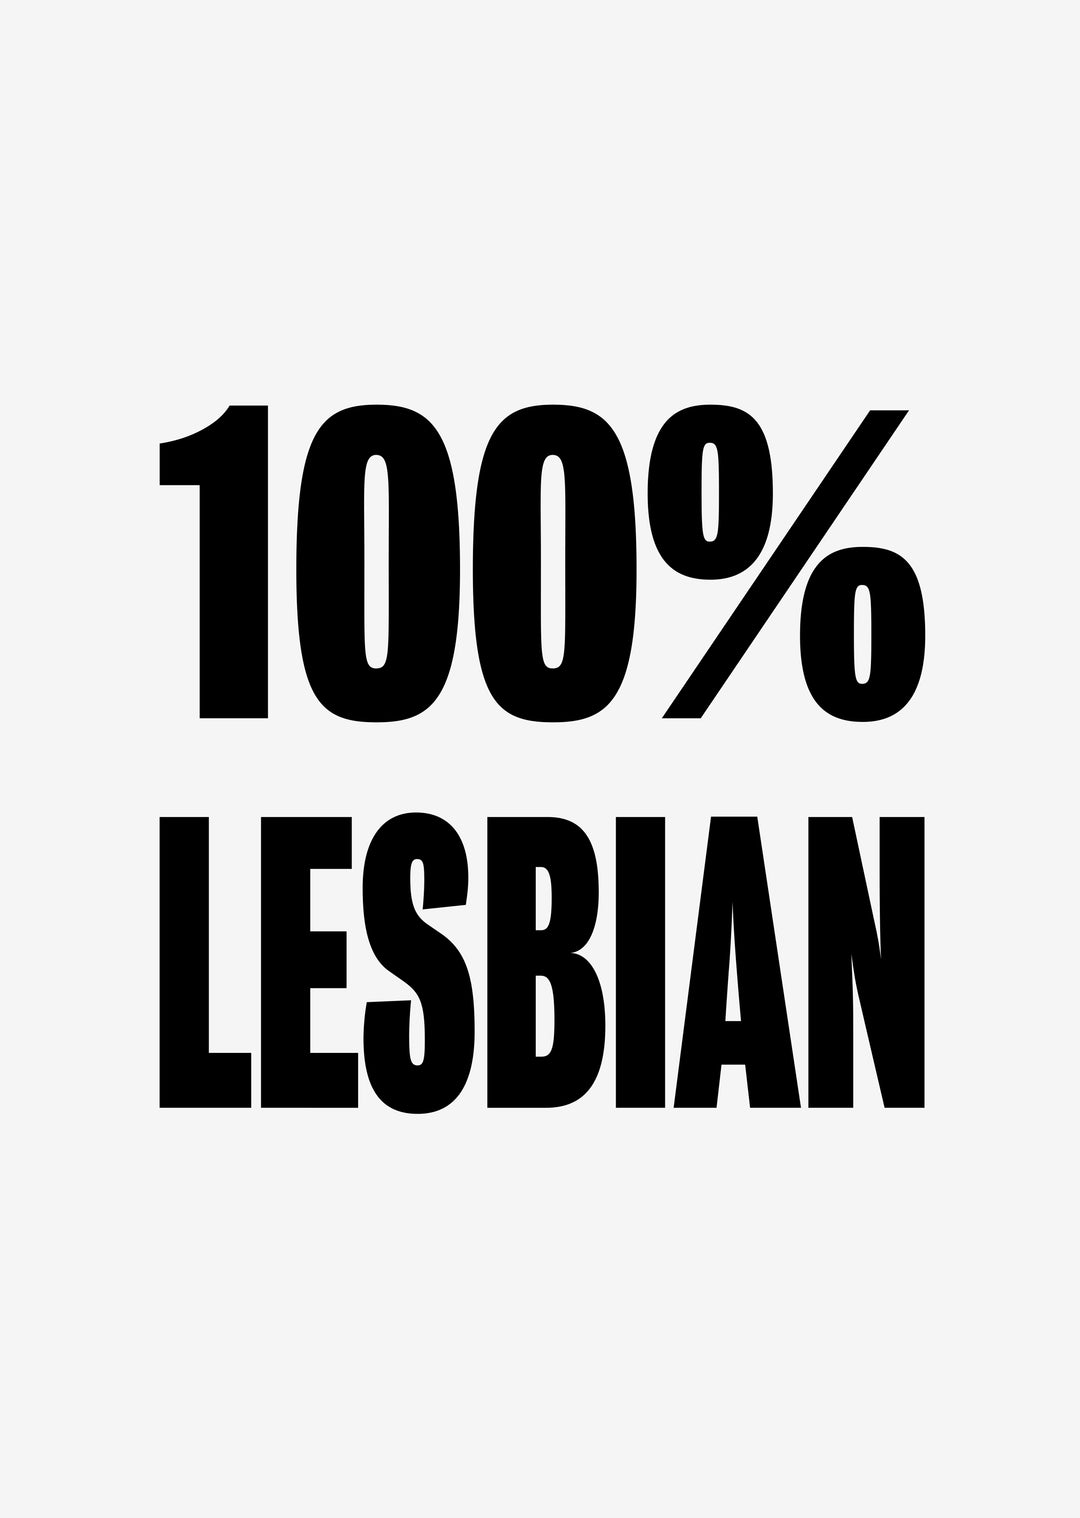 100% Lesbian' Typographic Wall Art Print